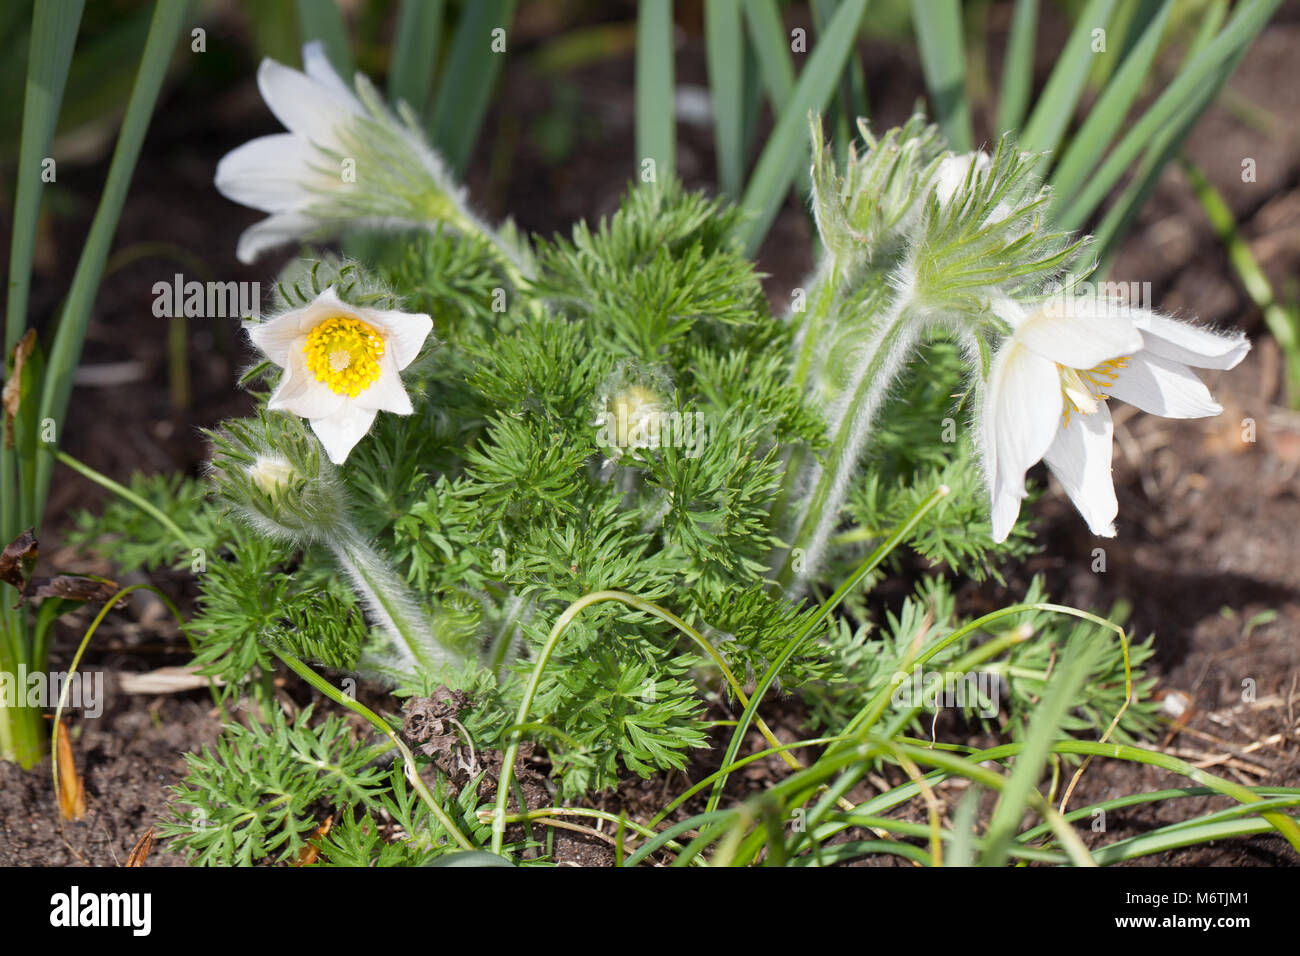 'Alba' Pasque flower, Backsippa, (Pulsatilla vulgaris) Stock Photo